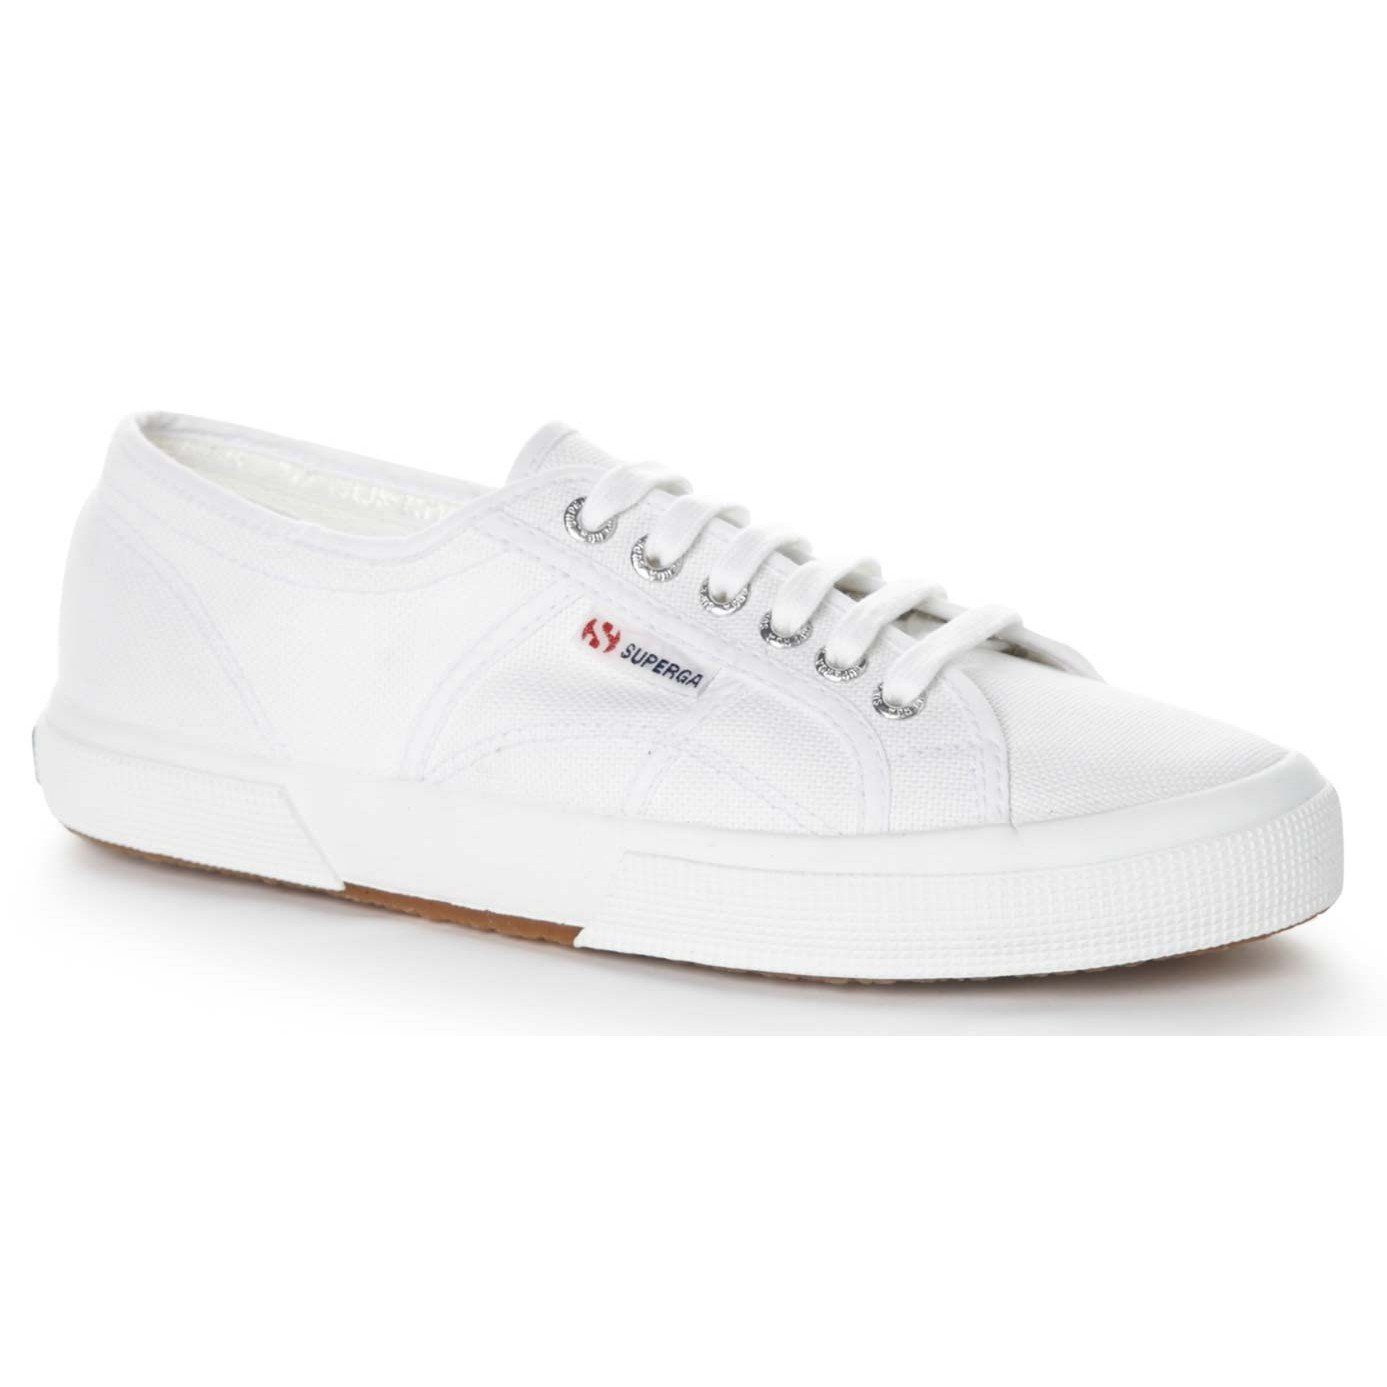 Superga Superga 2750 Cotu Classic S000010 Sneaker white (19801003)